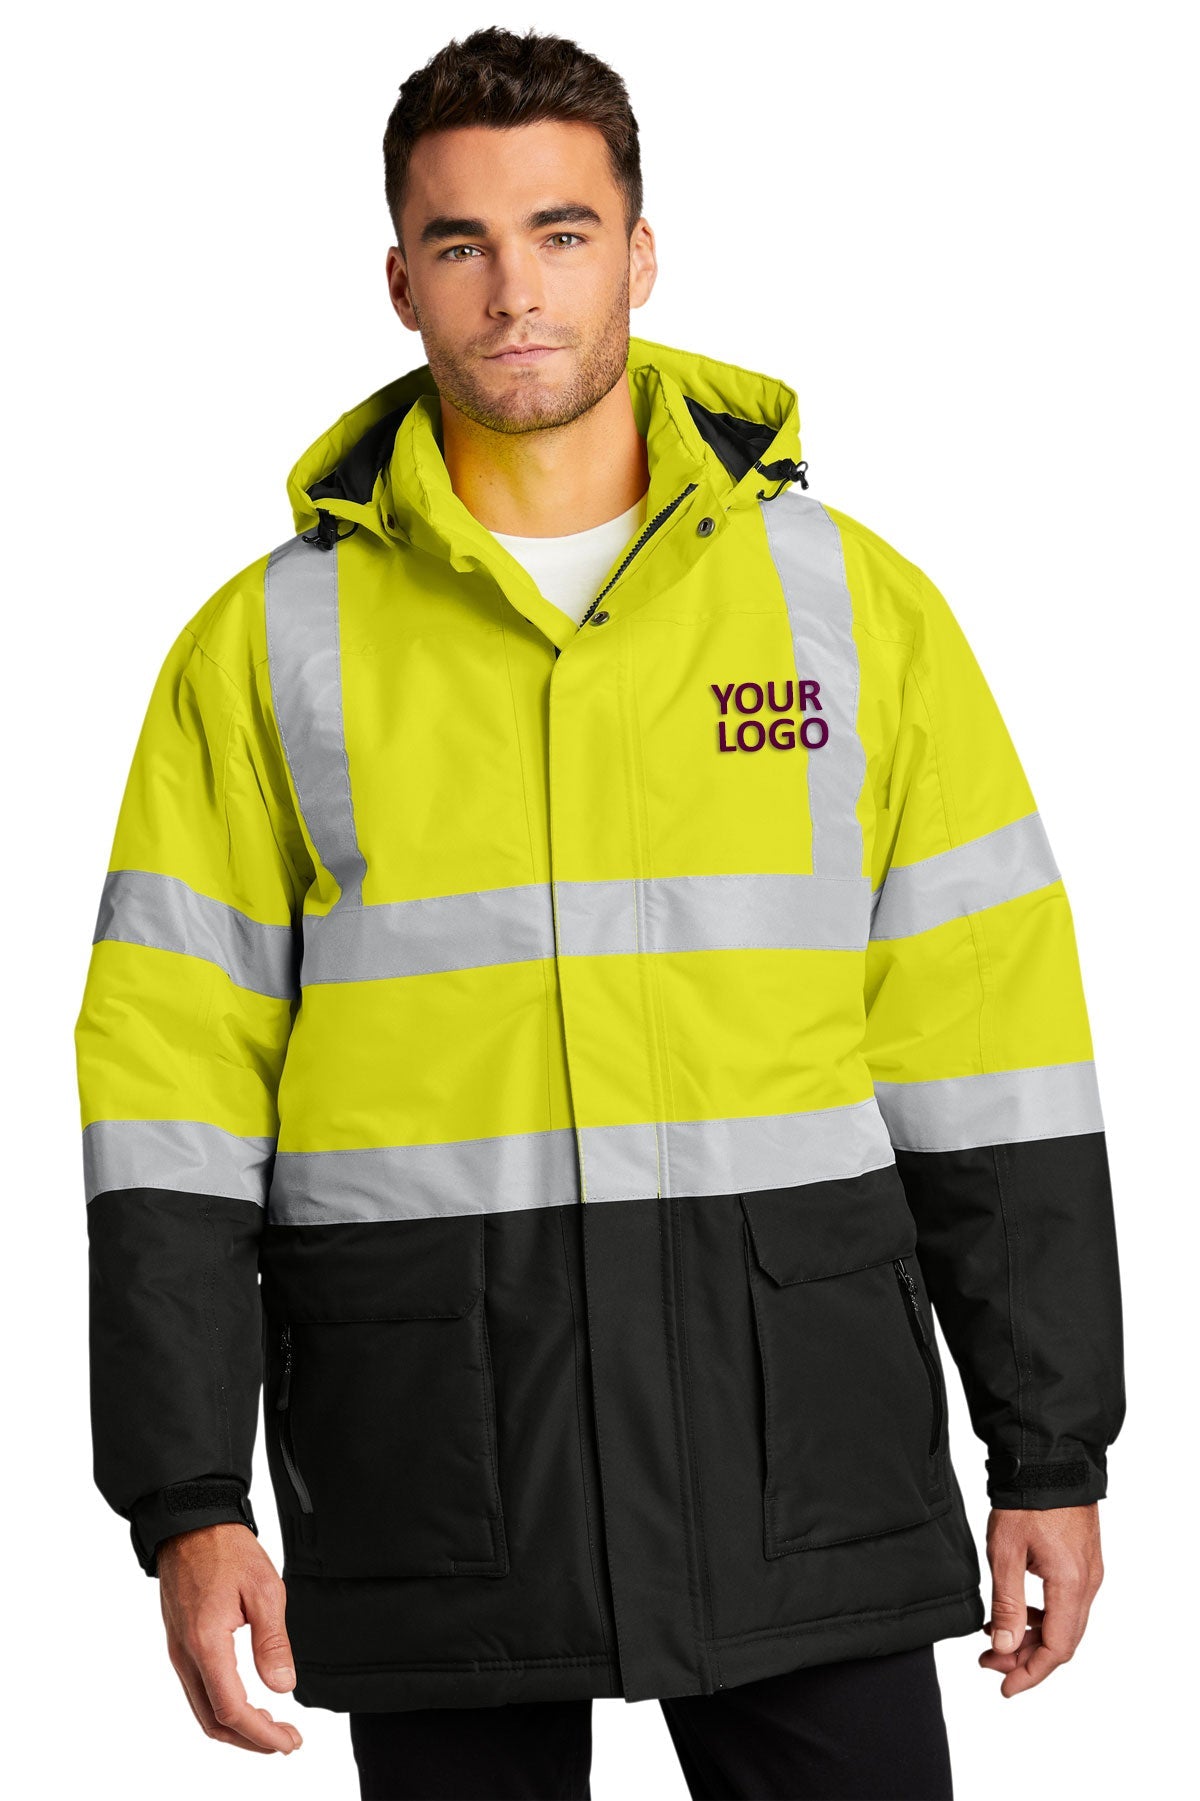 Port Authority Safety Yellow/ Black/ Reflective J799S custom logo jackets